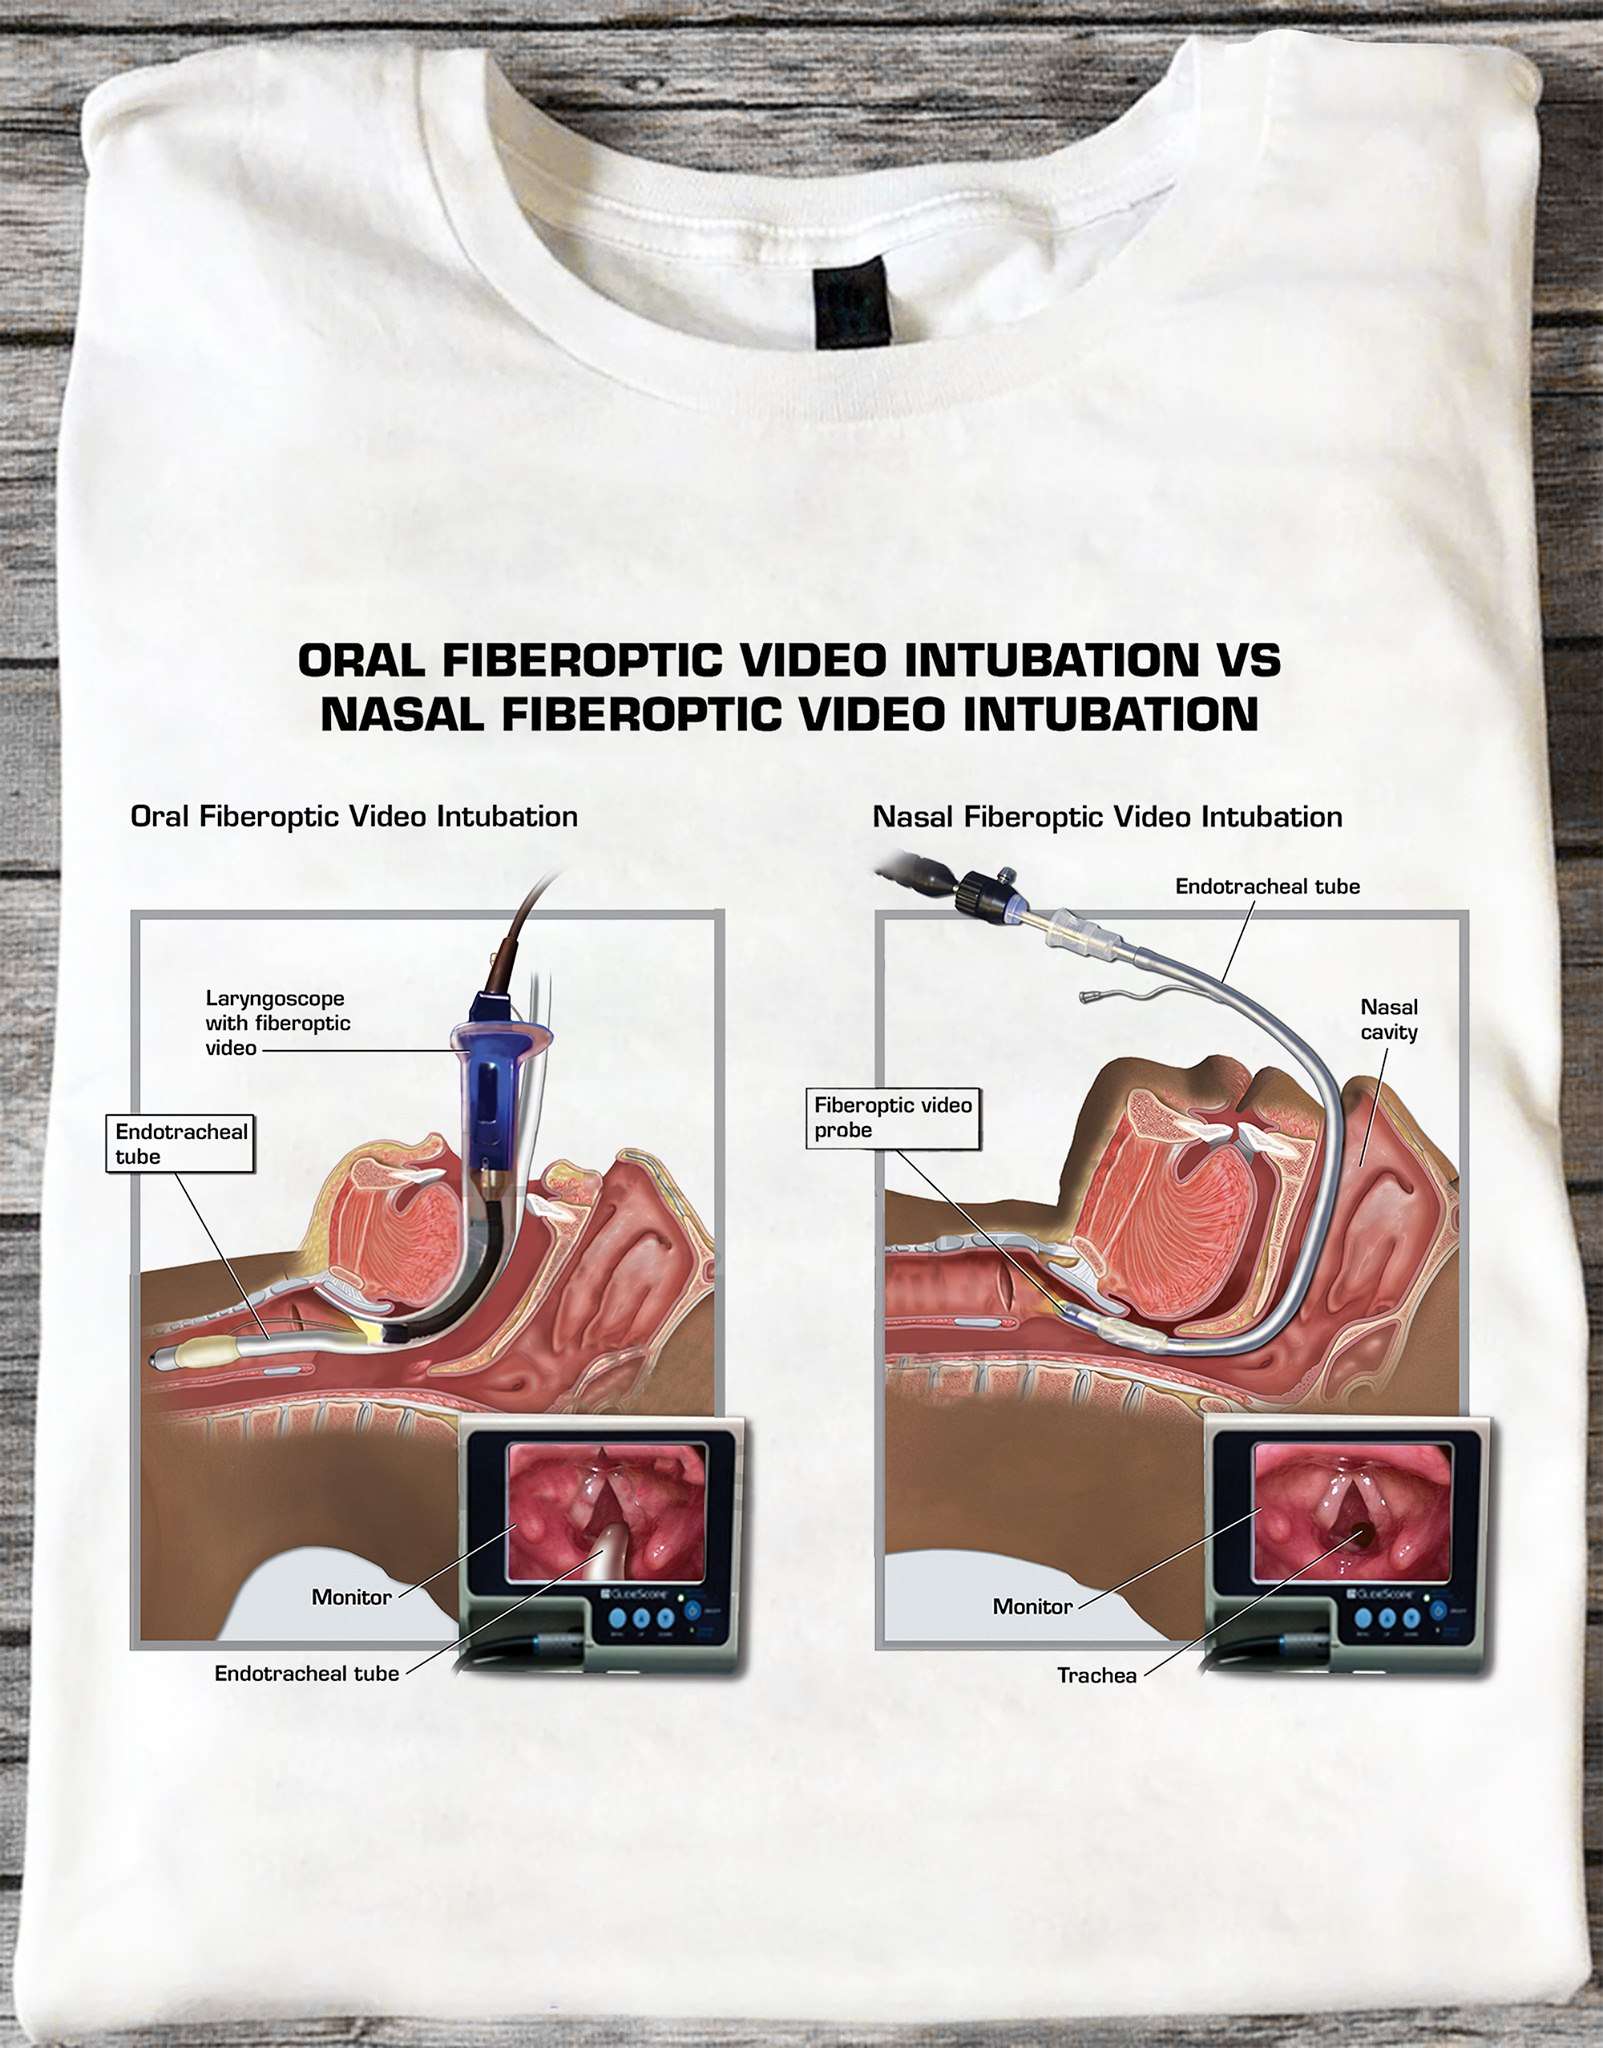 Oral fiberoptic video intubation, nasal fiberoptic video intubation, endotracheal tube